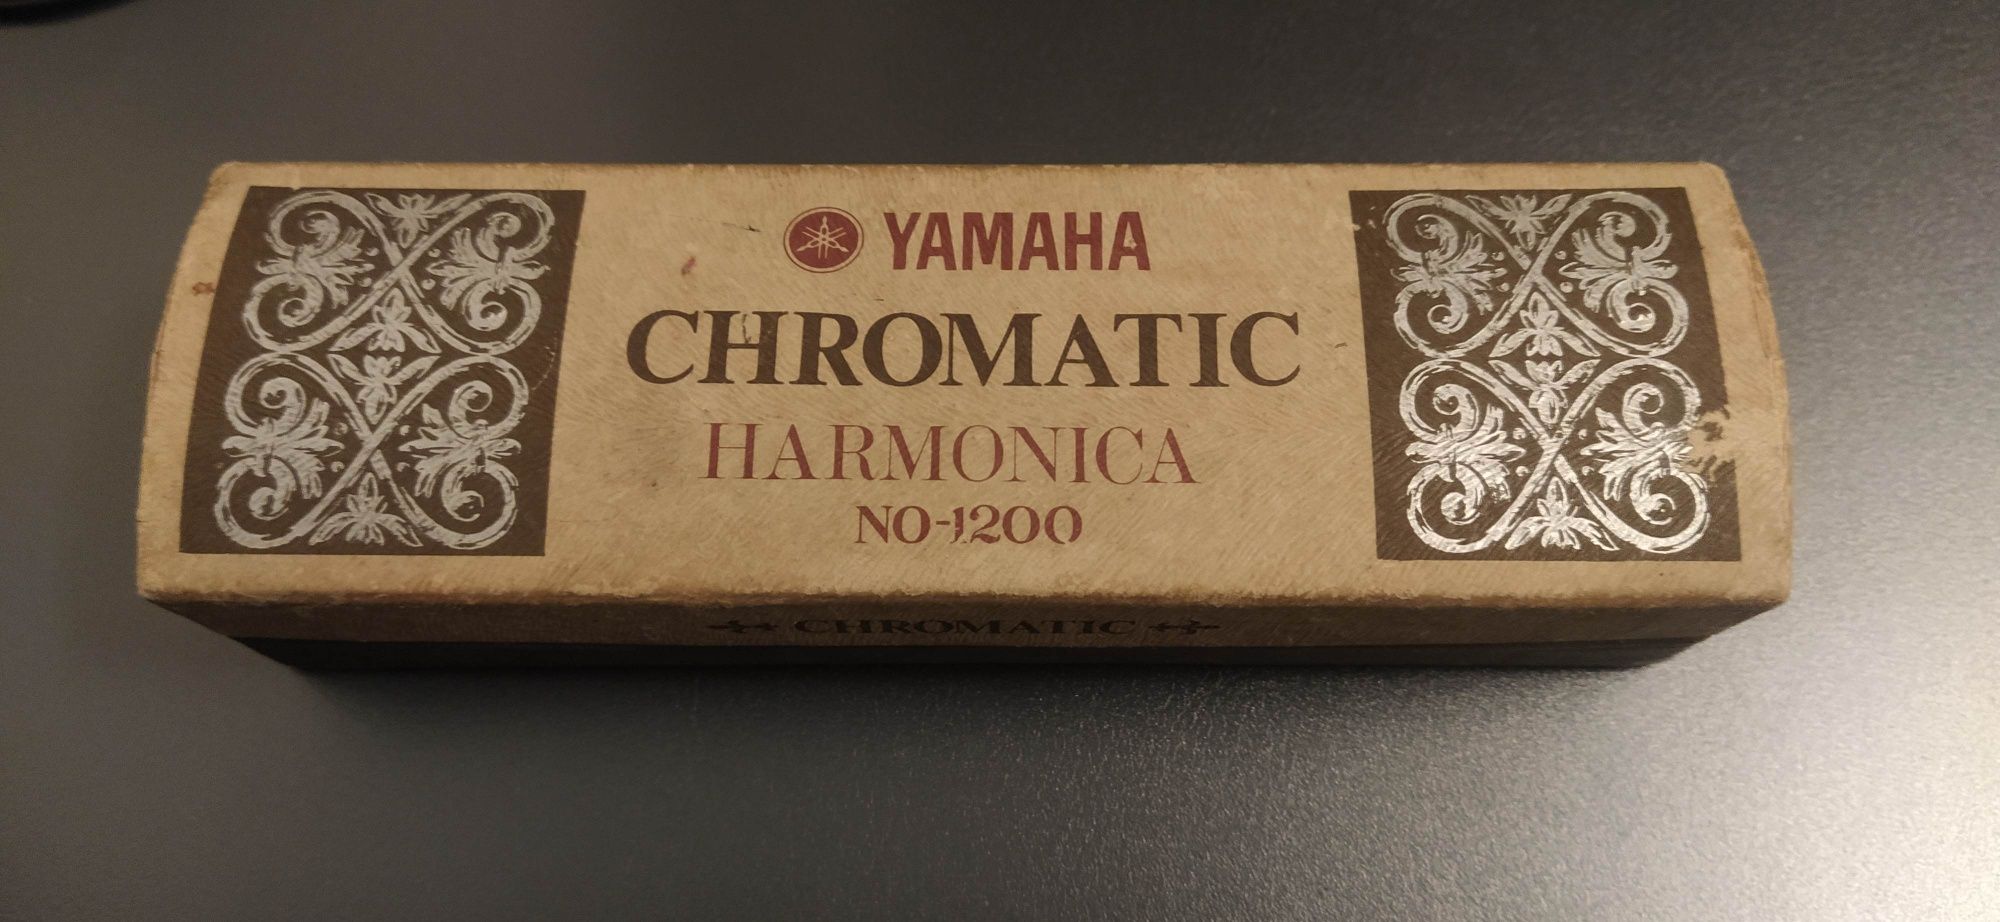 Harmonica vintage Yamaha